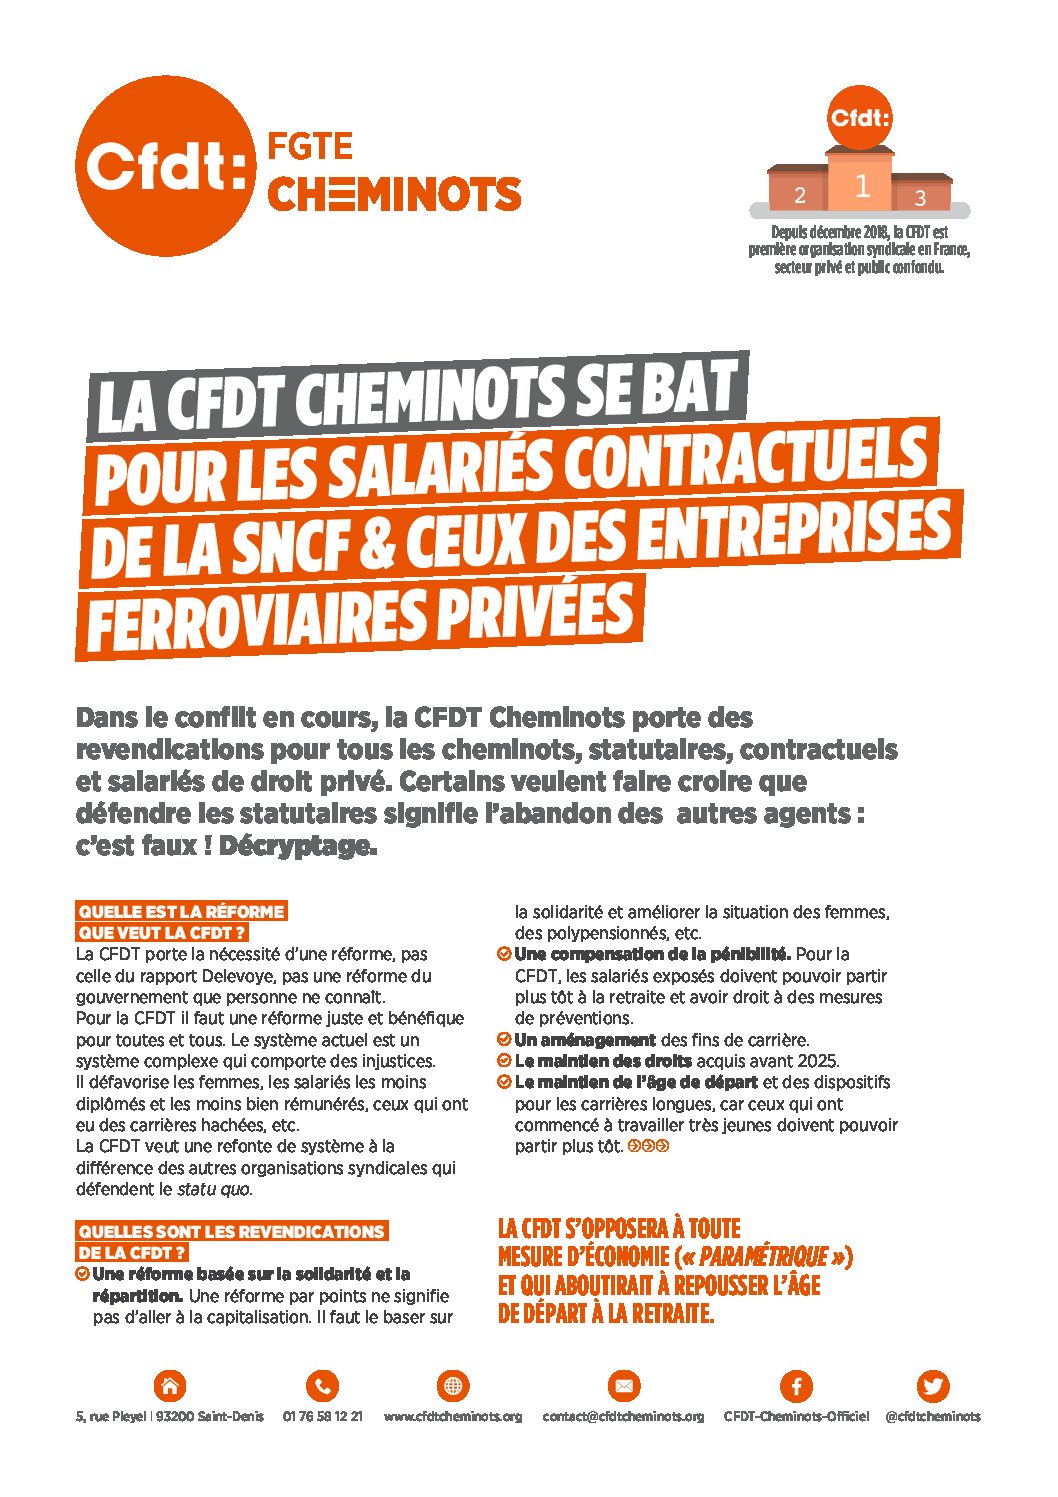 CONTRACTUELS SNCF & EFP